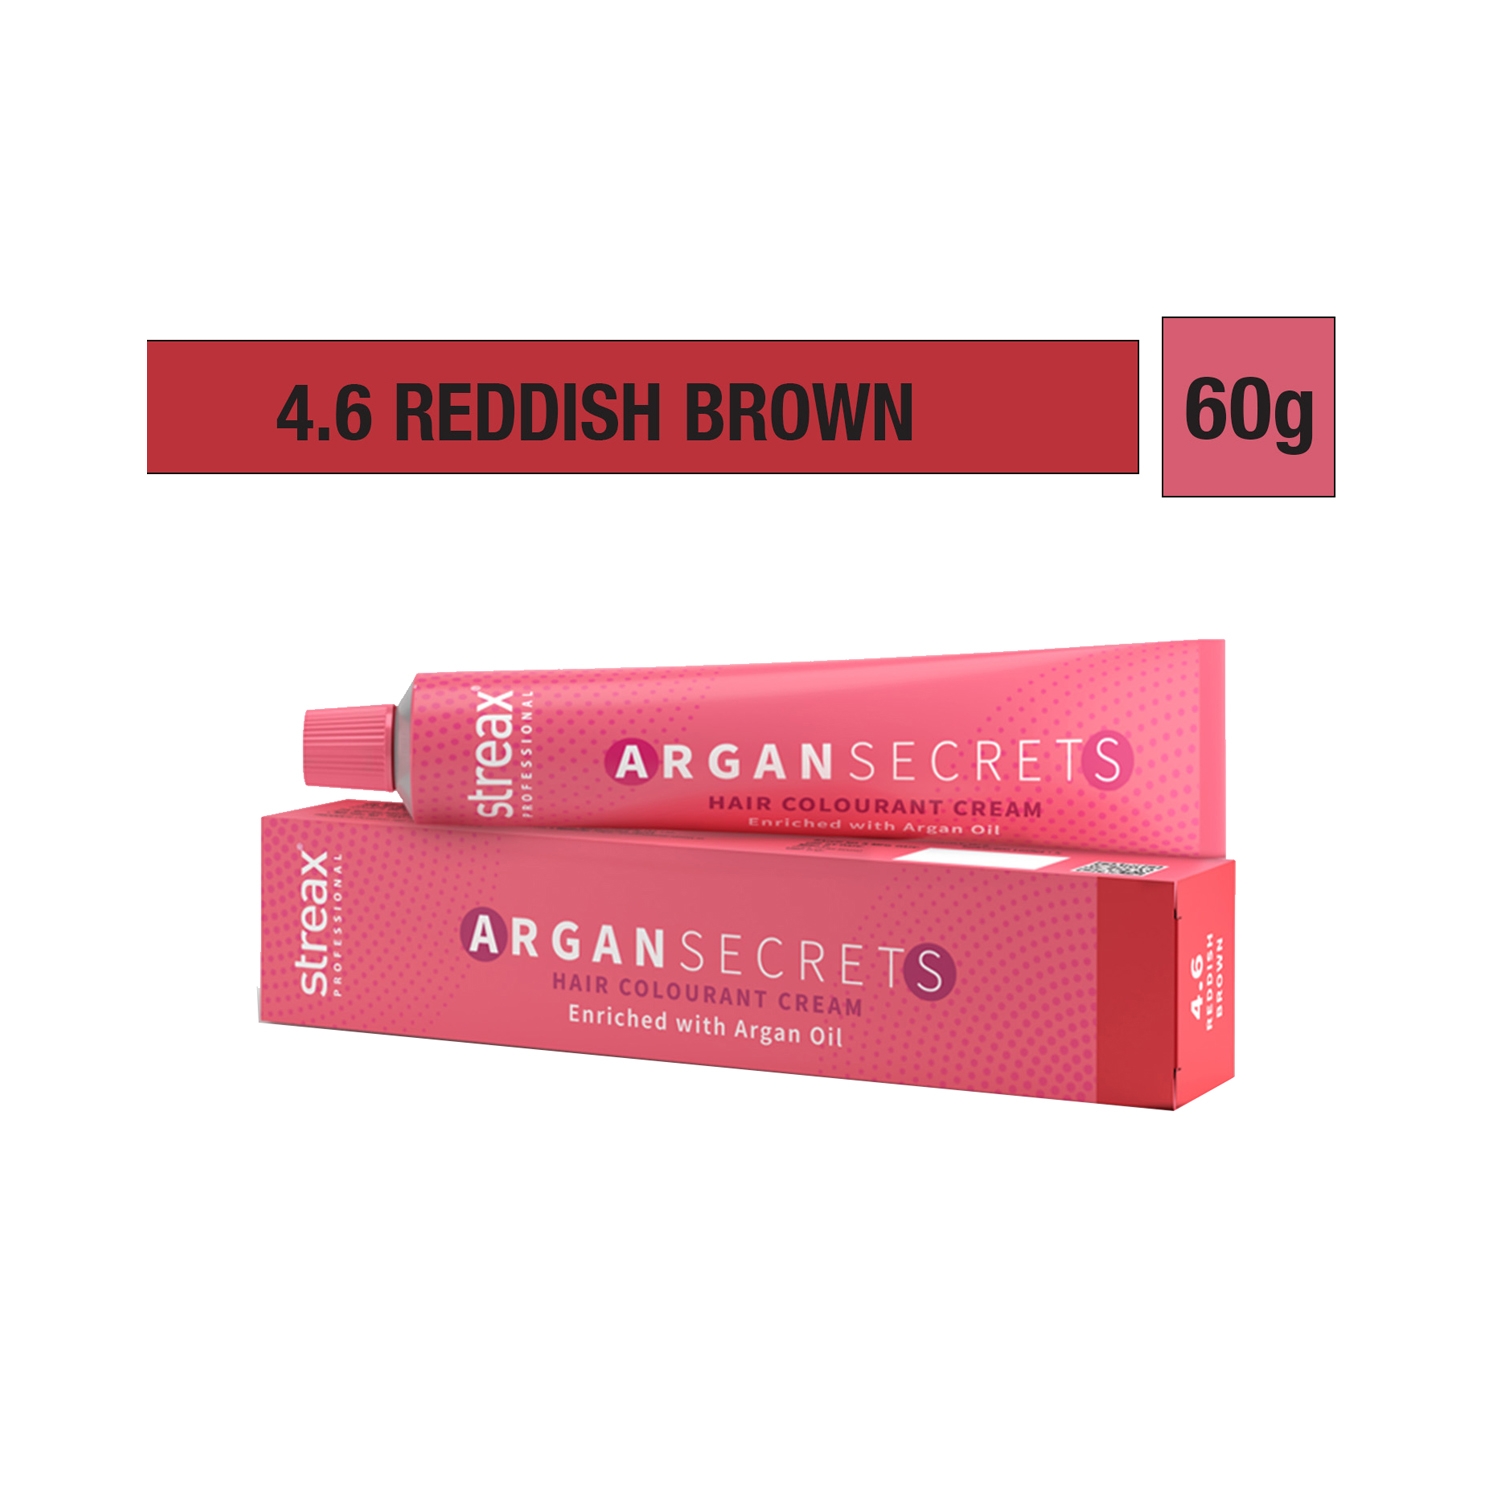 Streax Professional Argan Secrets Hair Colorant Cream - 4.6 Reddish Brown (60g)